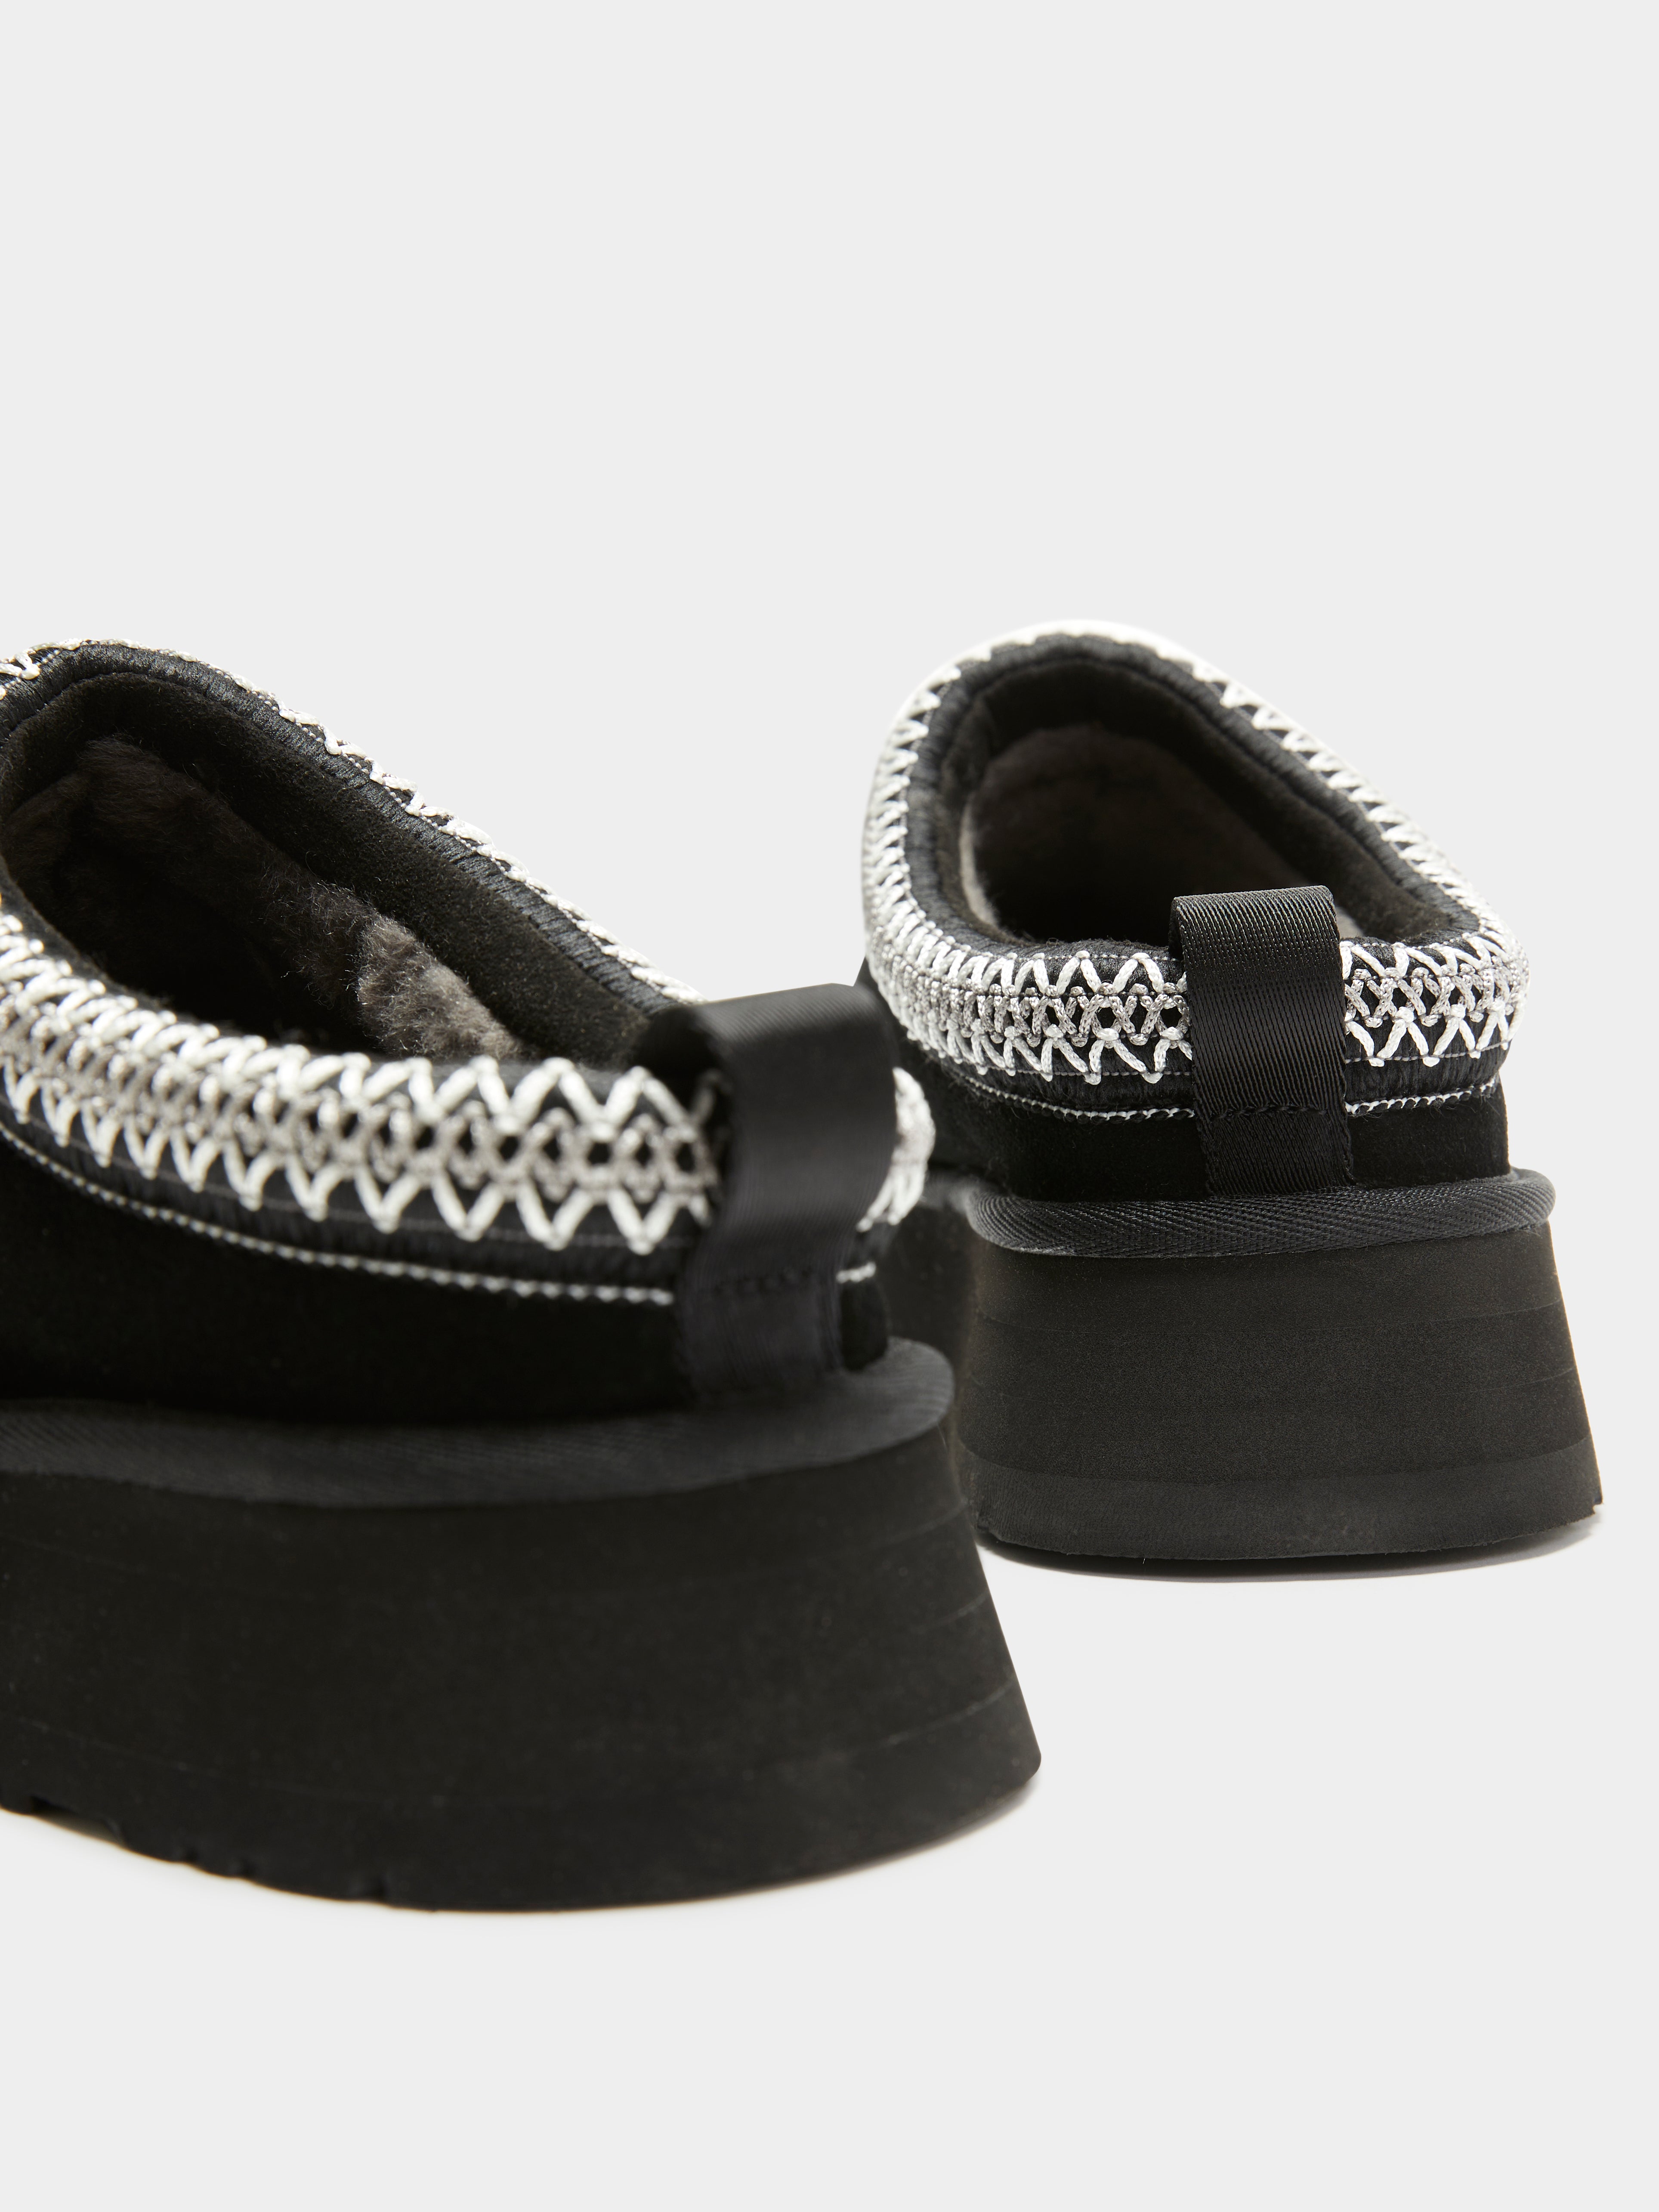 Womens Tazz Platform Slip-On Shoes in Black